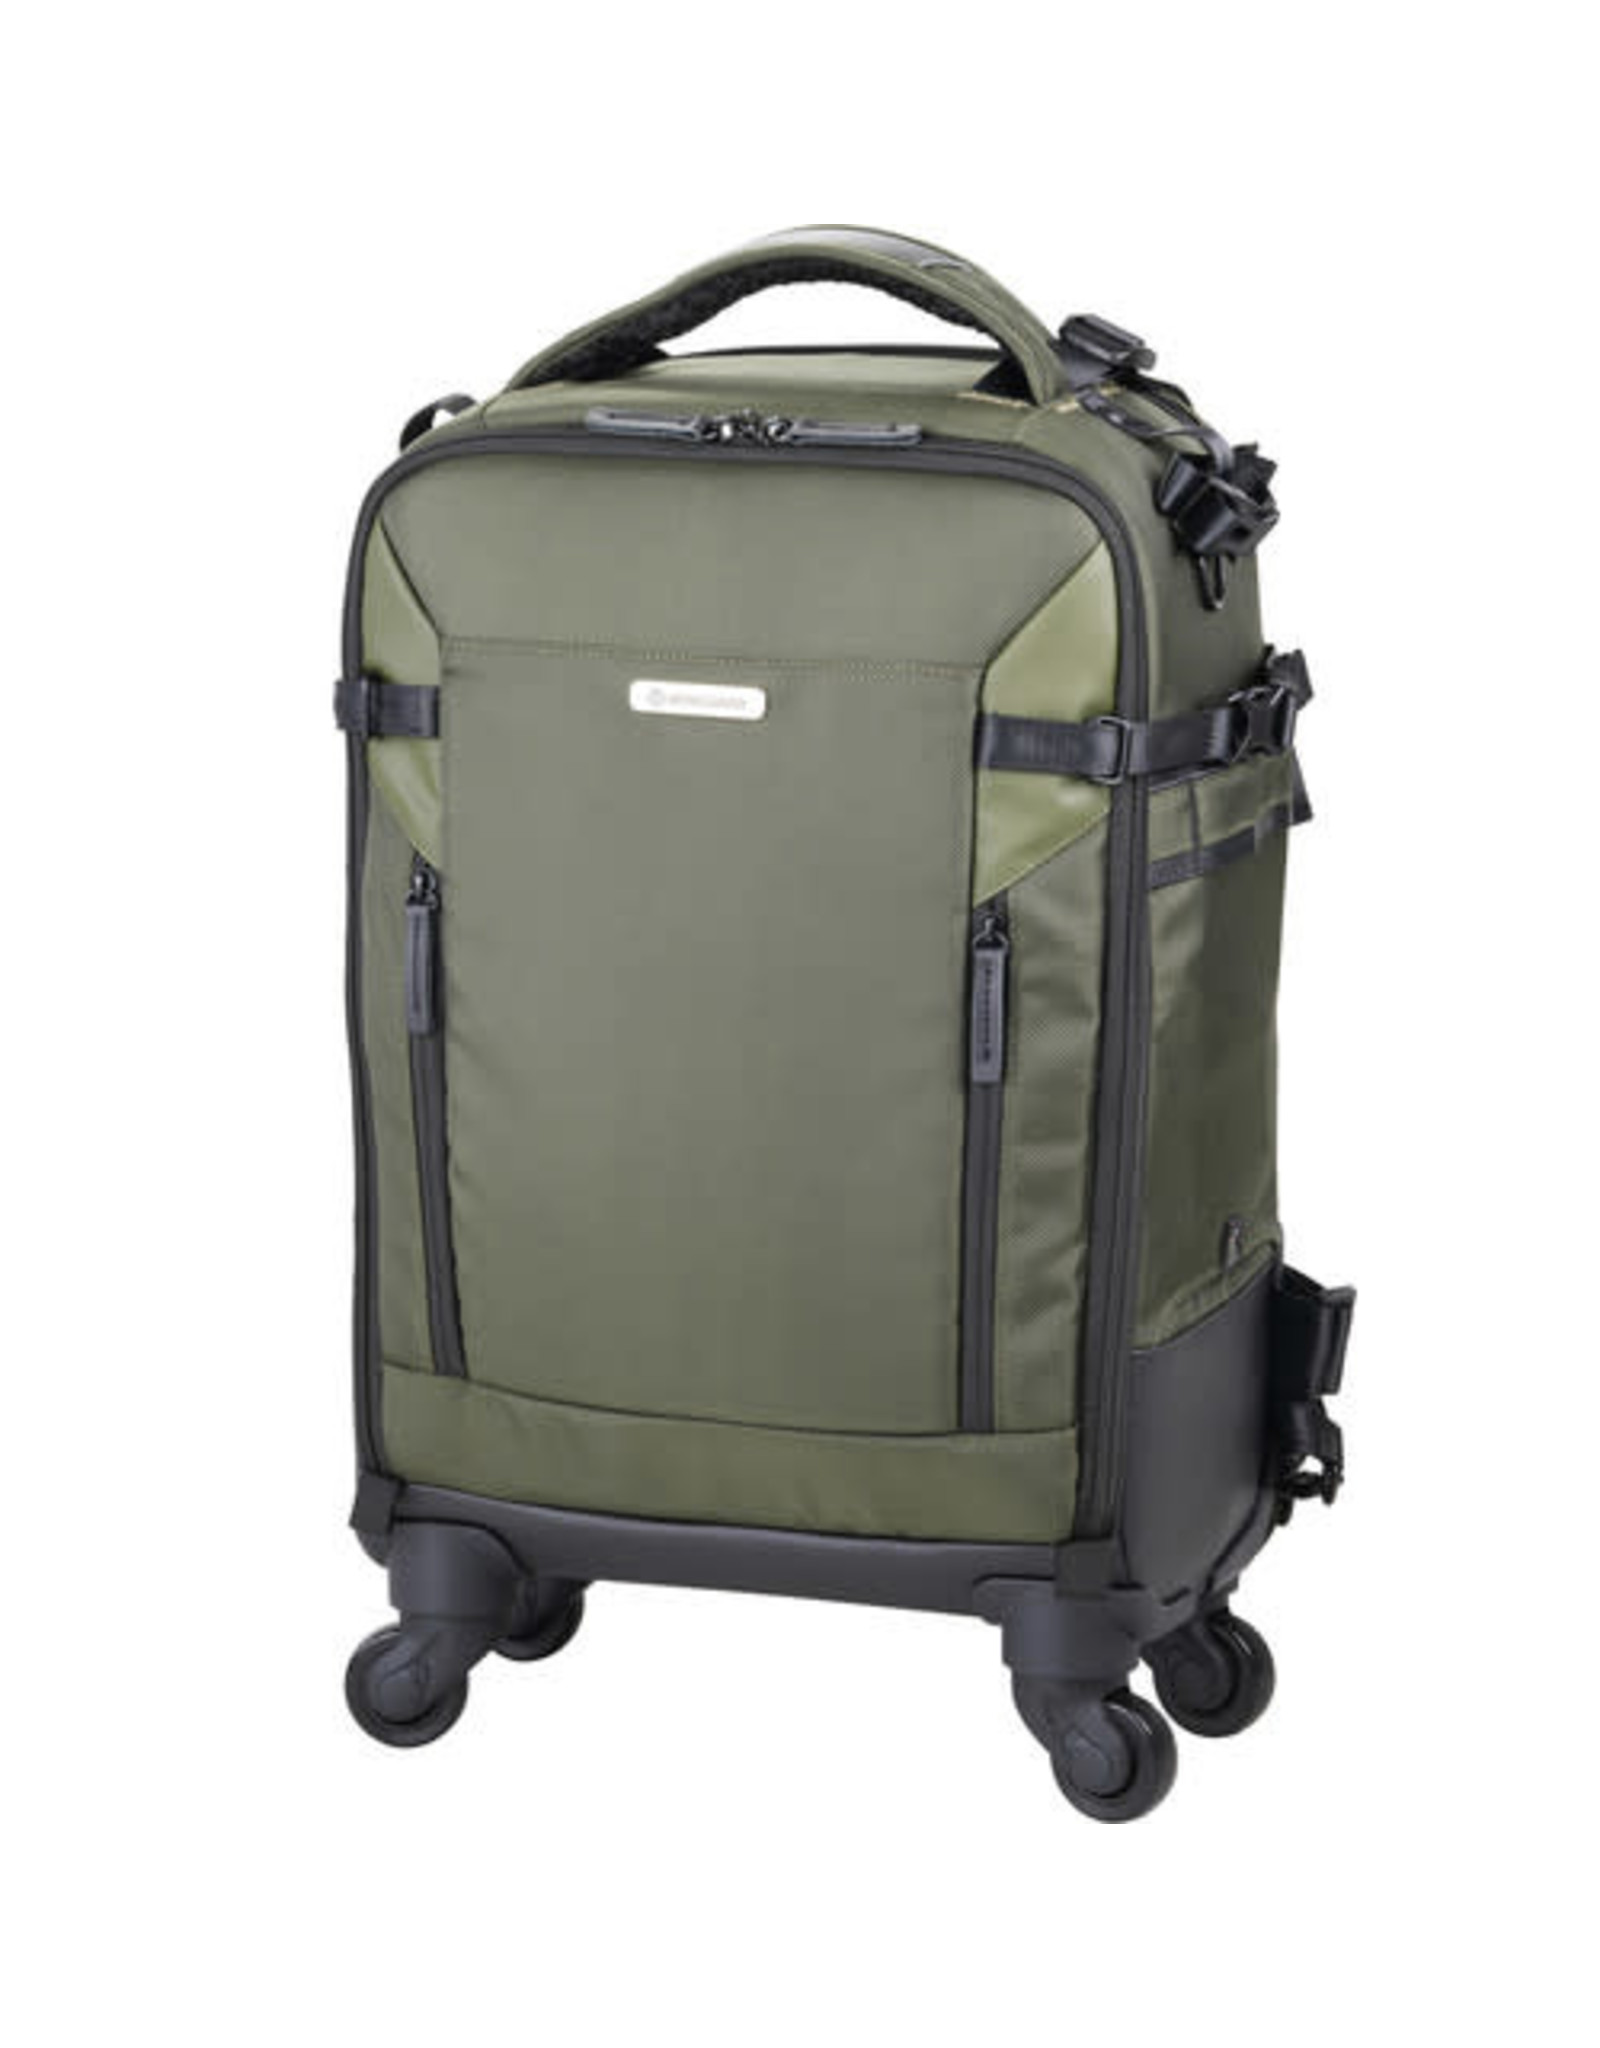 Vanguard Vanguard VEO SELECT 55T Trolley Backpack (Choose Color)